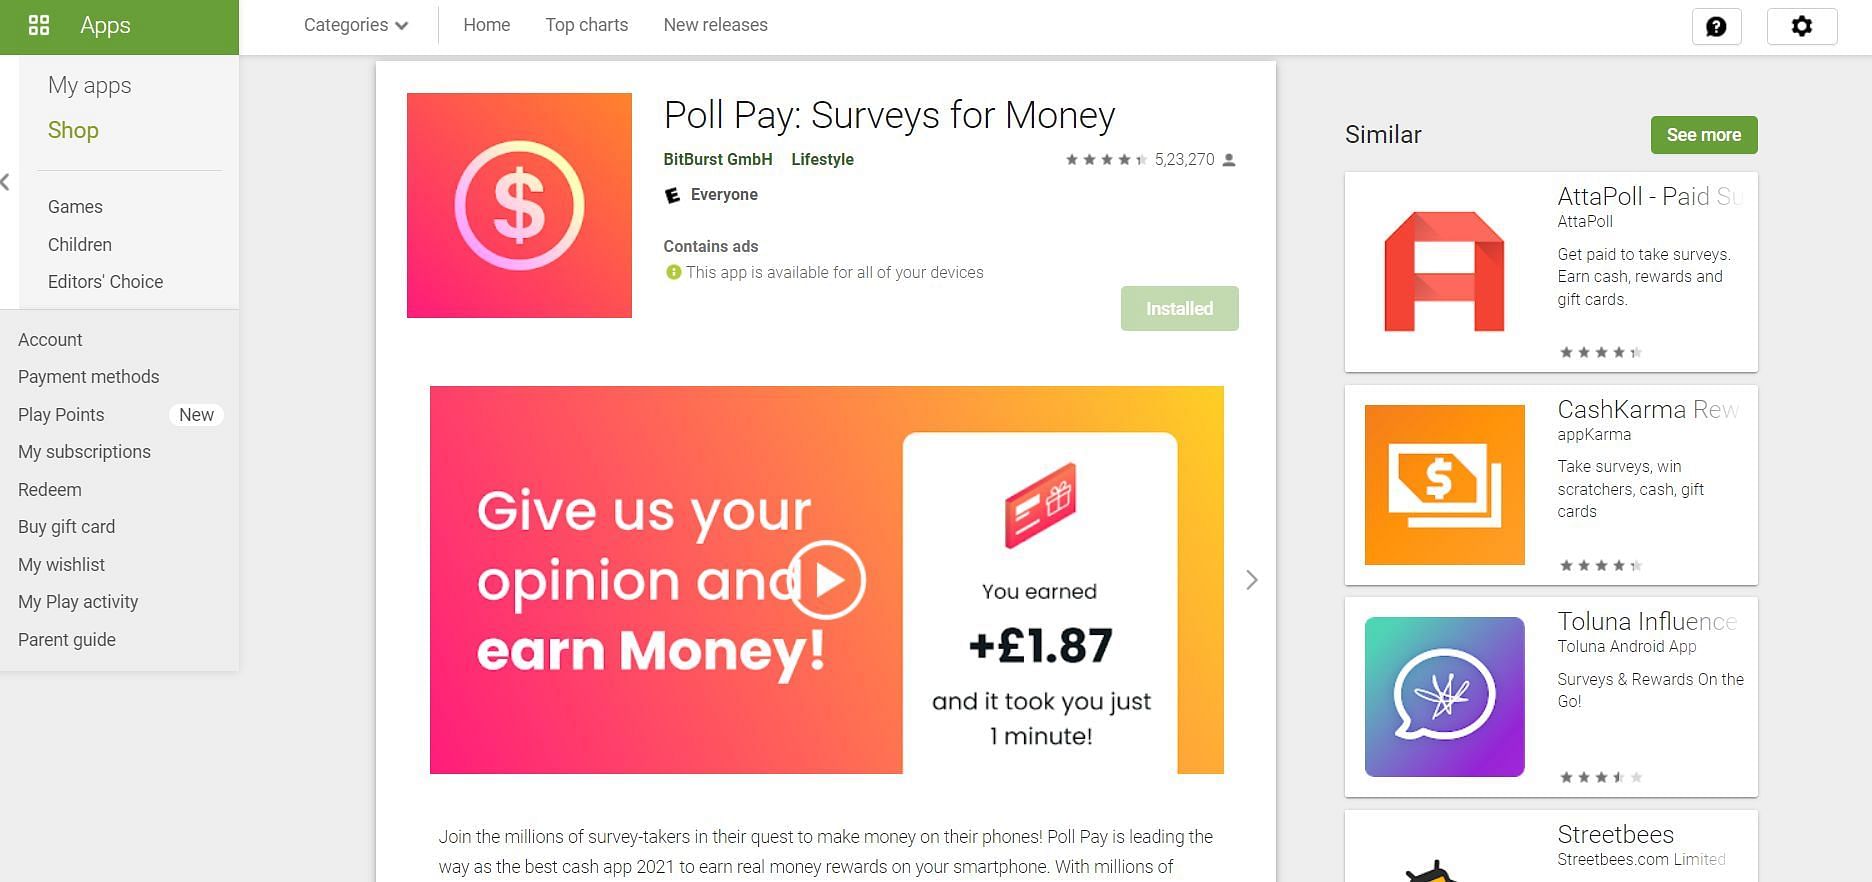 Poll Pay: Surveys for Money (Image via Google Play)